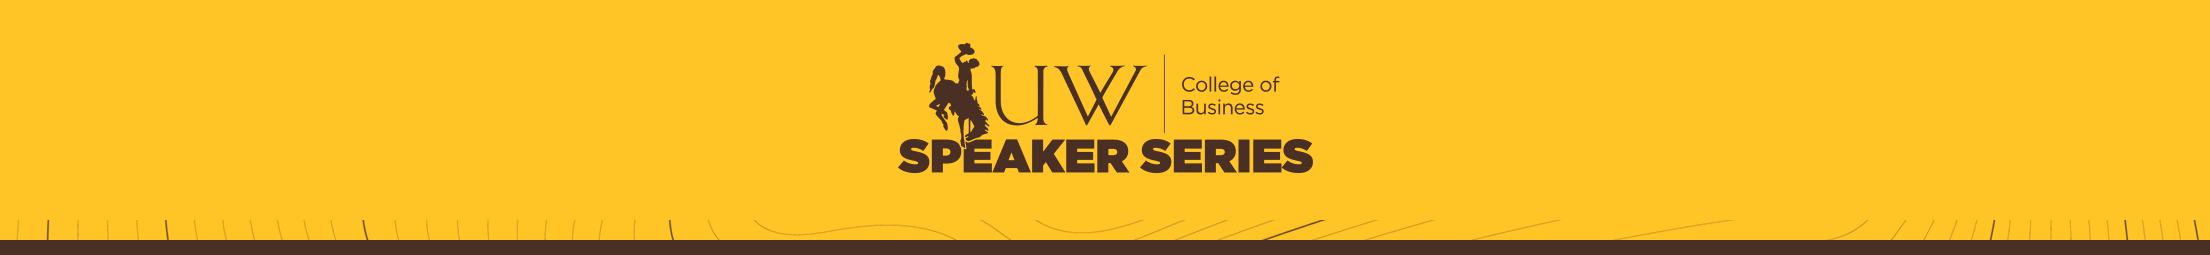 College of Business Speaker Series